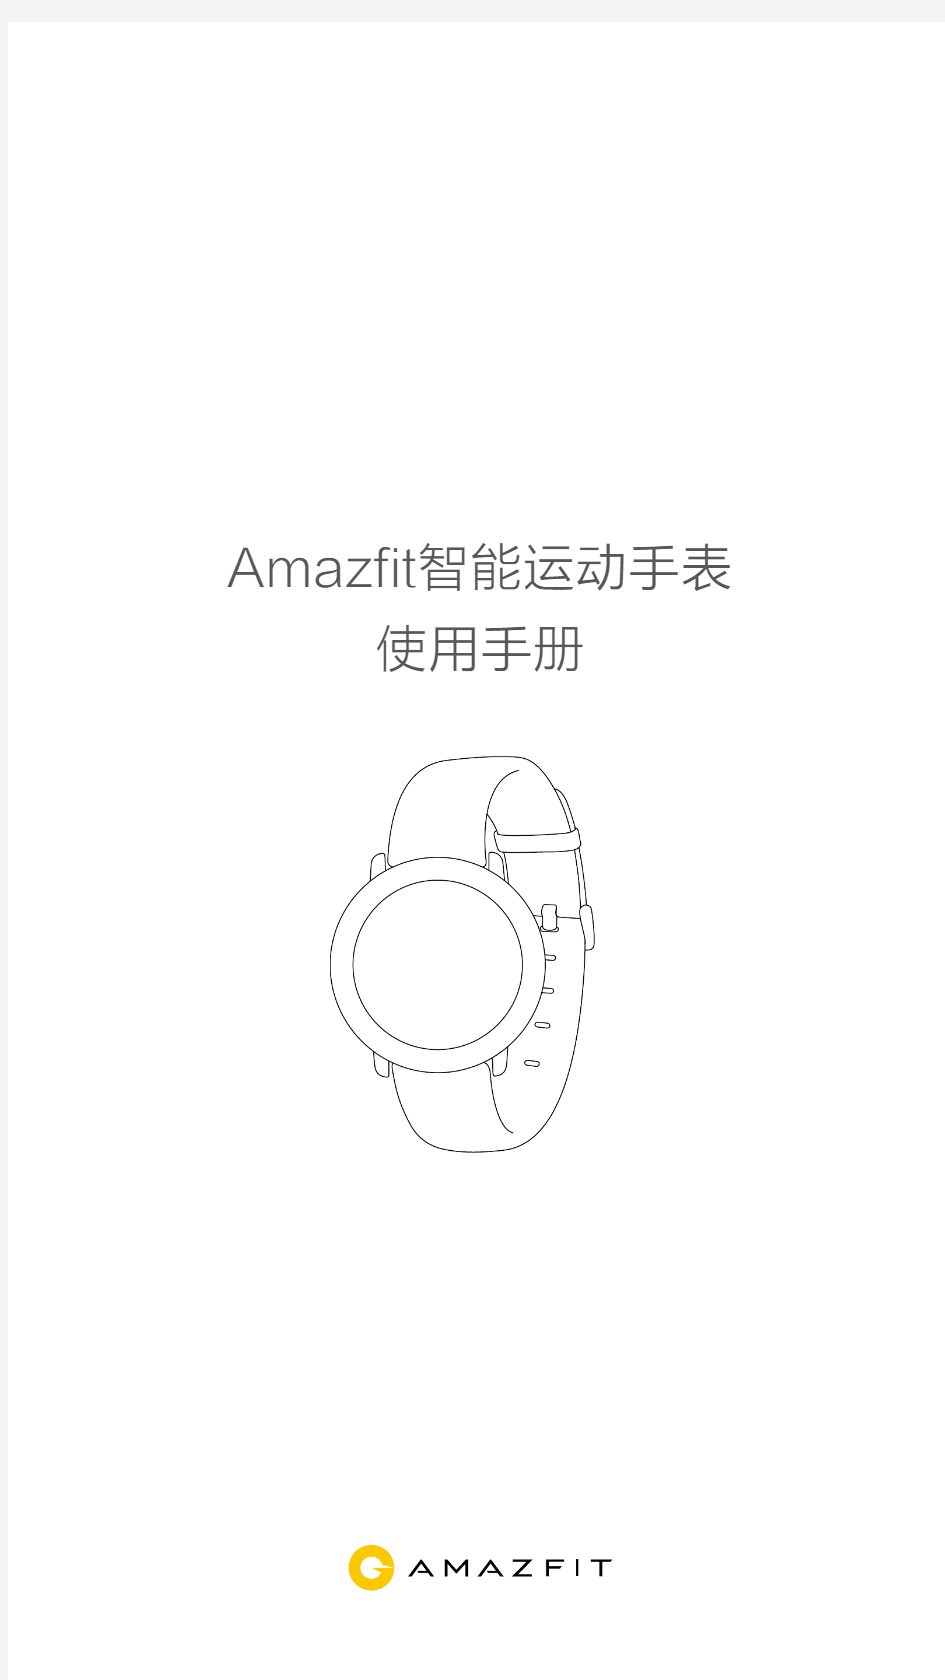 Amazfit智能运动手表使用手册